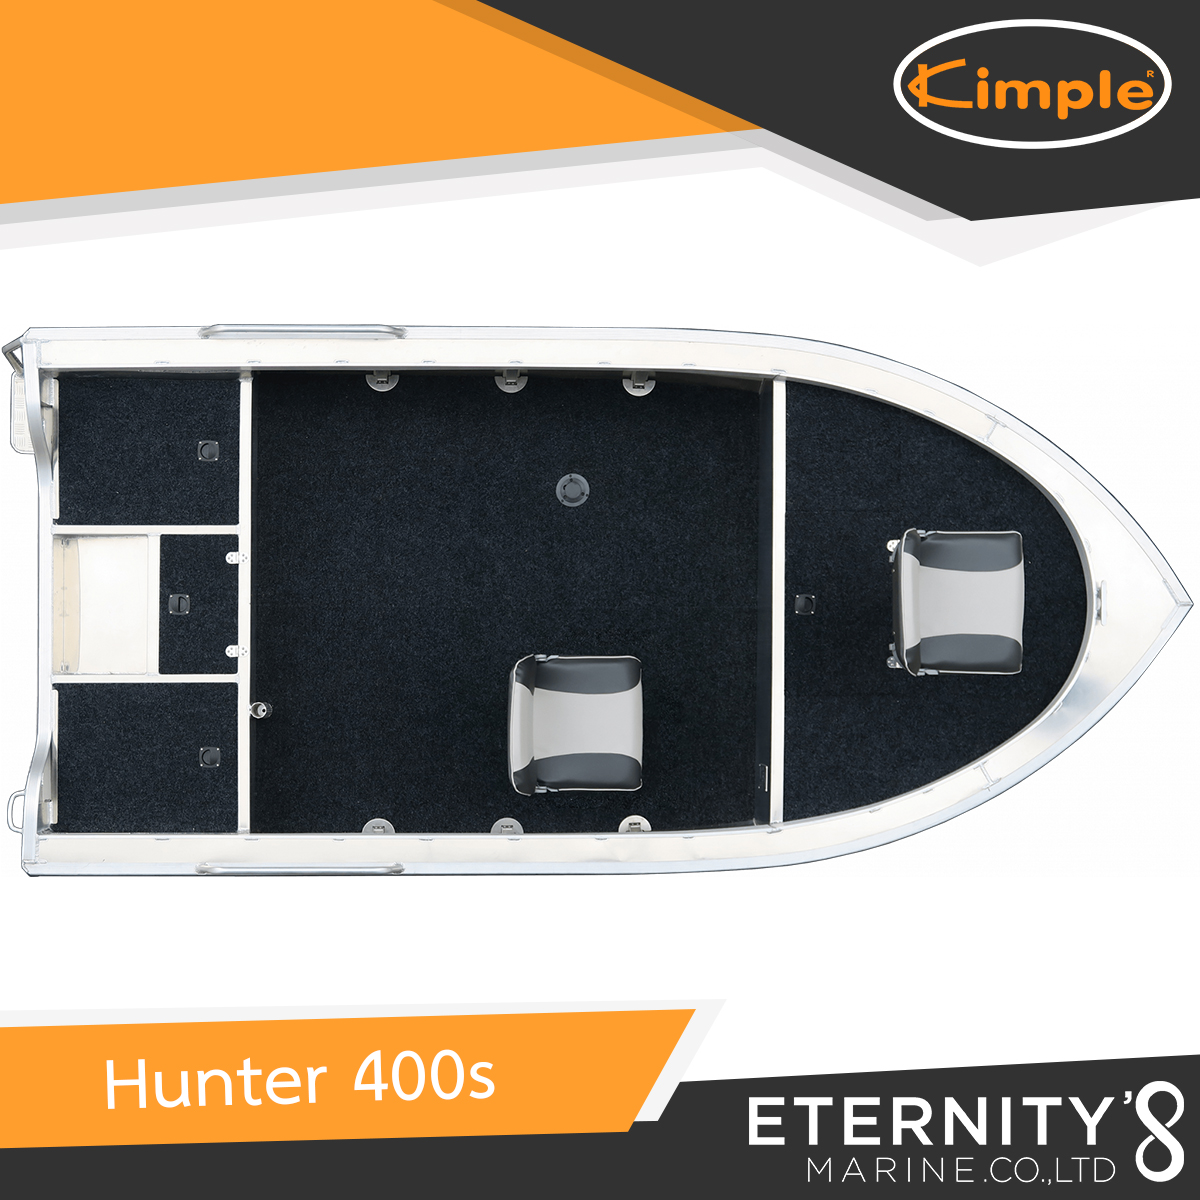 Kimple Hunter400s